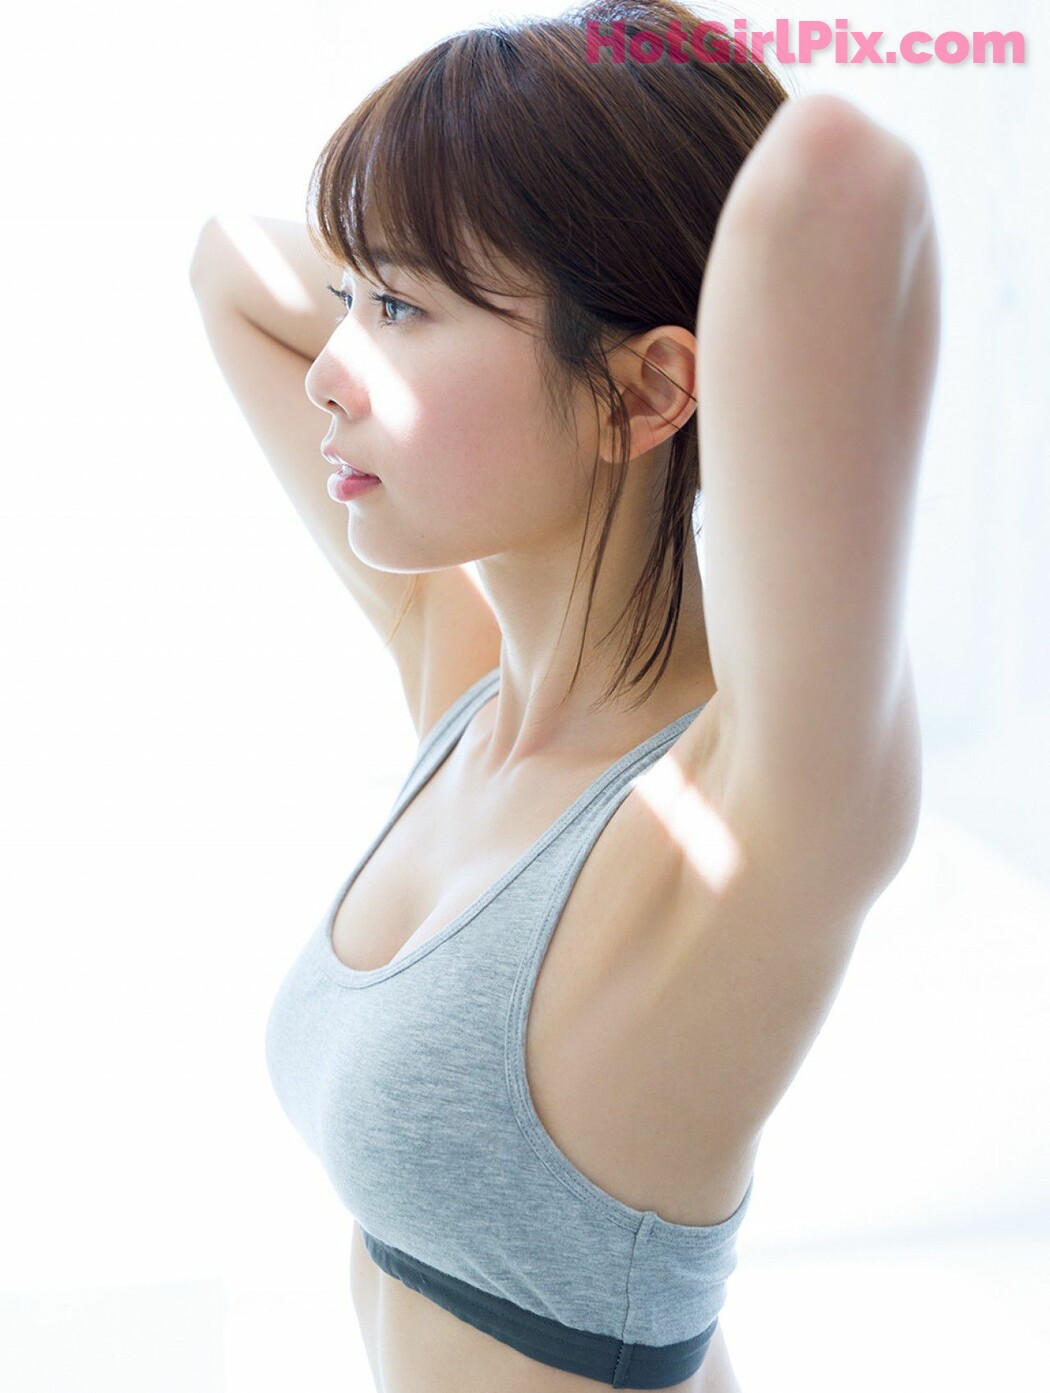 [FRIDAY] Nishimura Hinoka "「ラストアイドル」, 23-year-old beauty がビキニ映え!